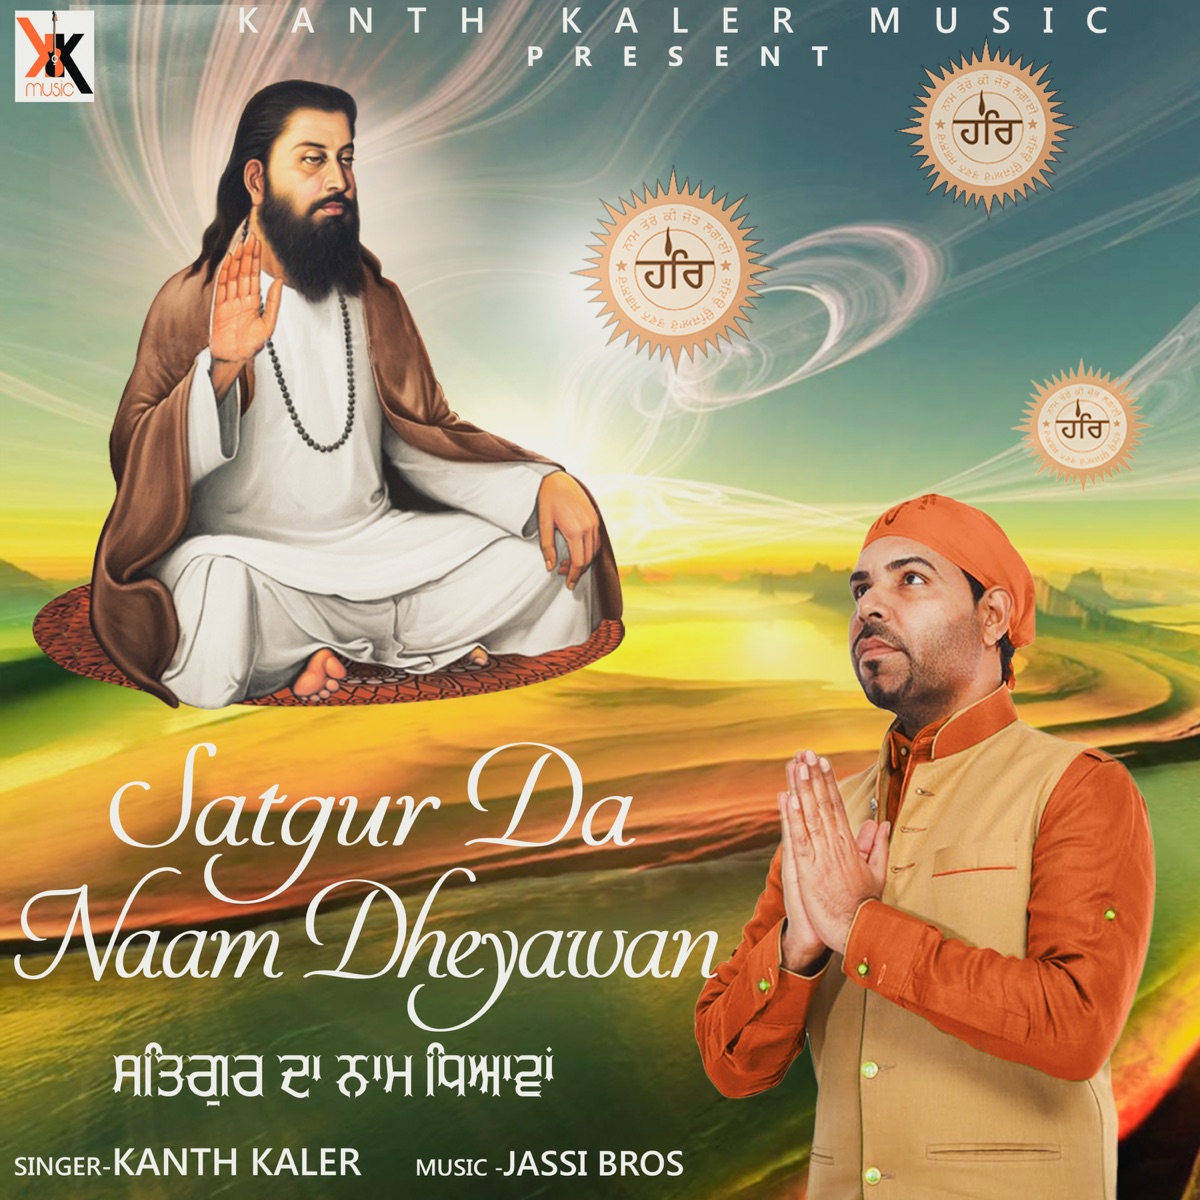 Satgur Da Naam Dheyawan - Album by Kanth Kaler - Apple Music